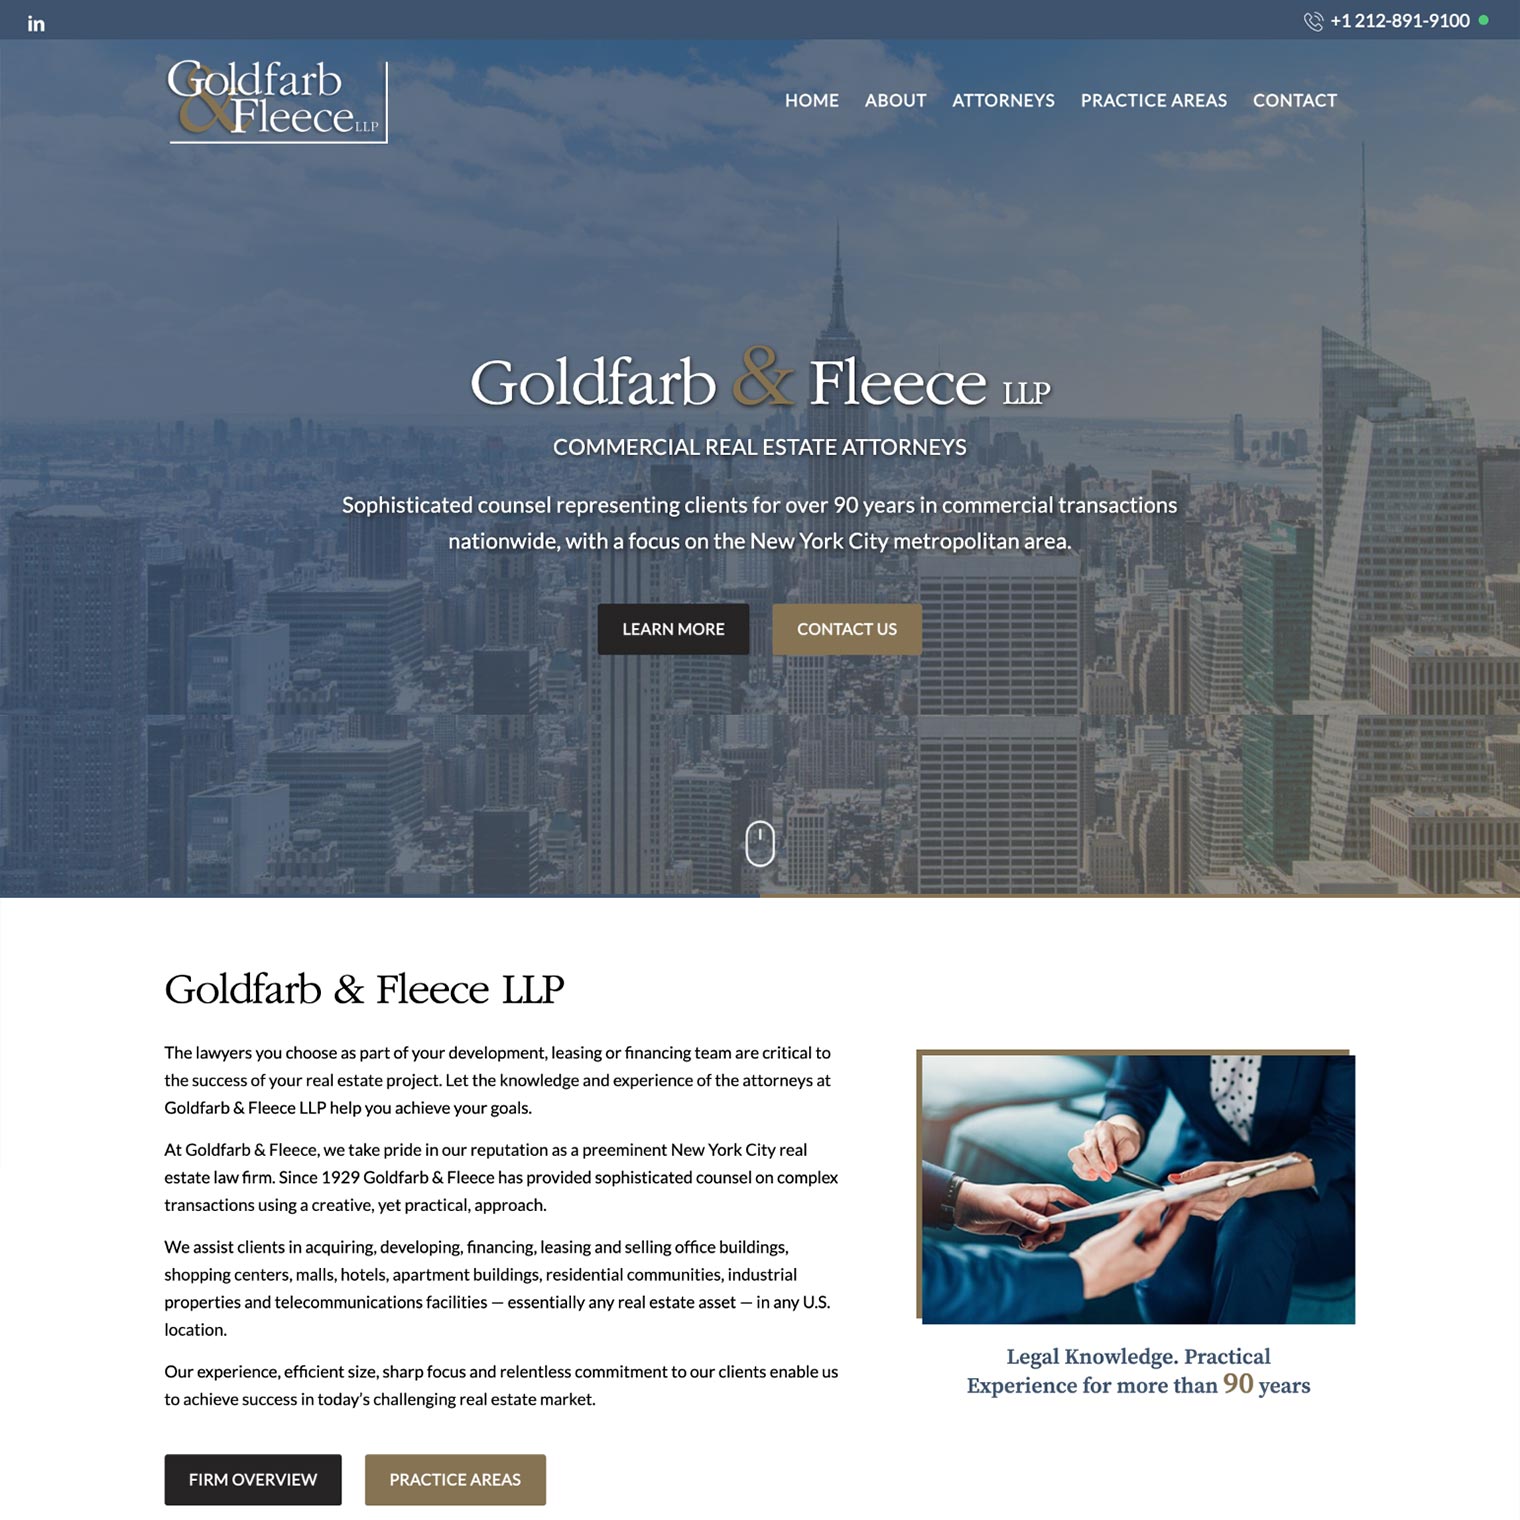 Goldfarb & Fleece LLP